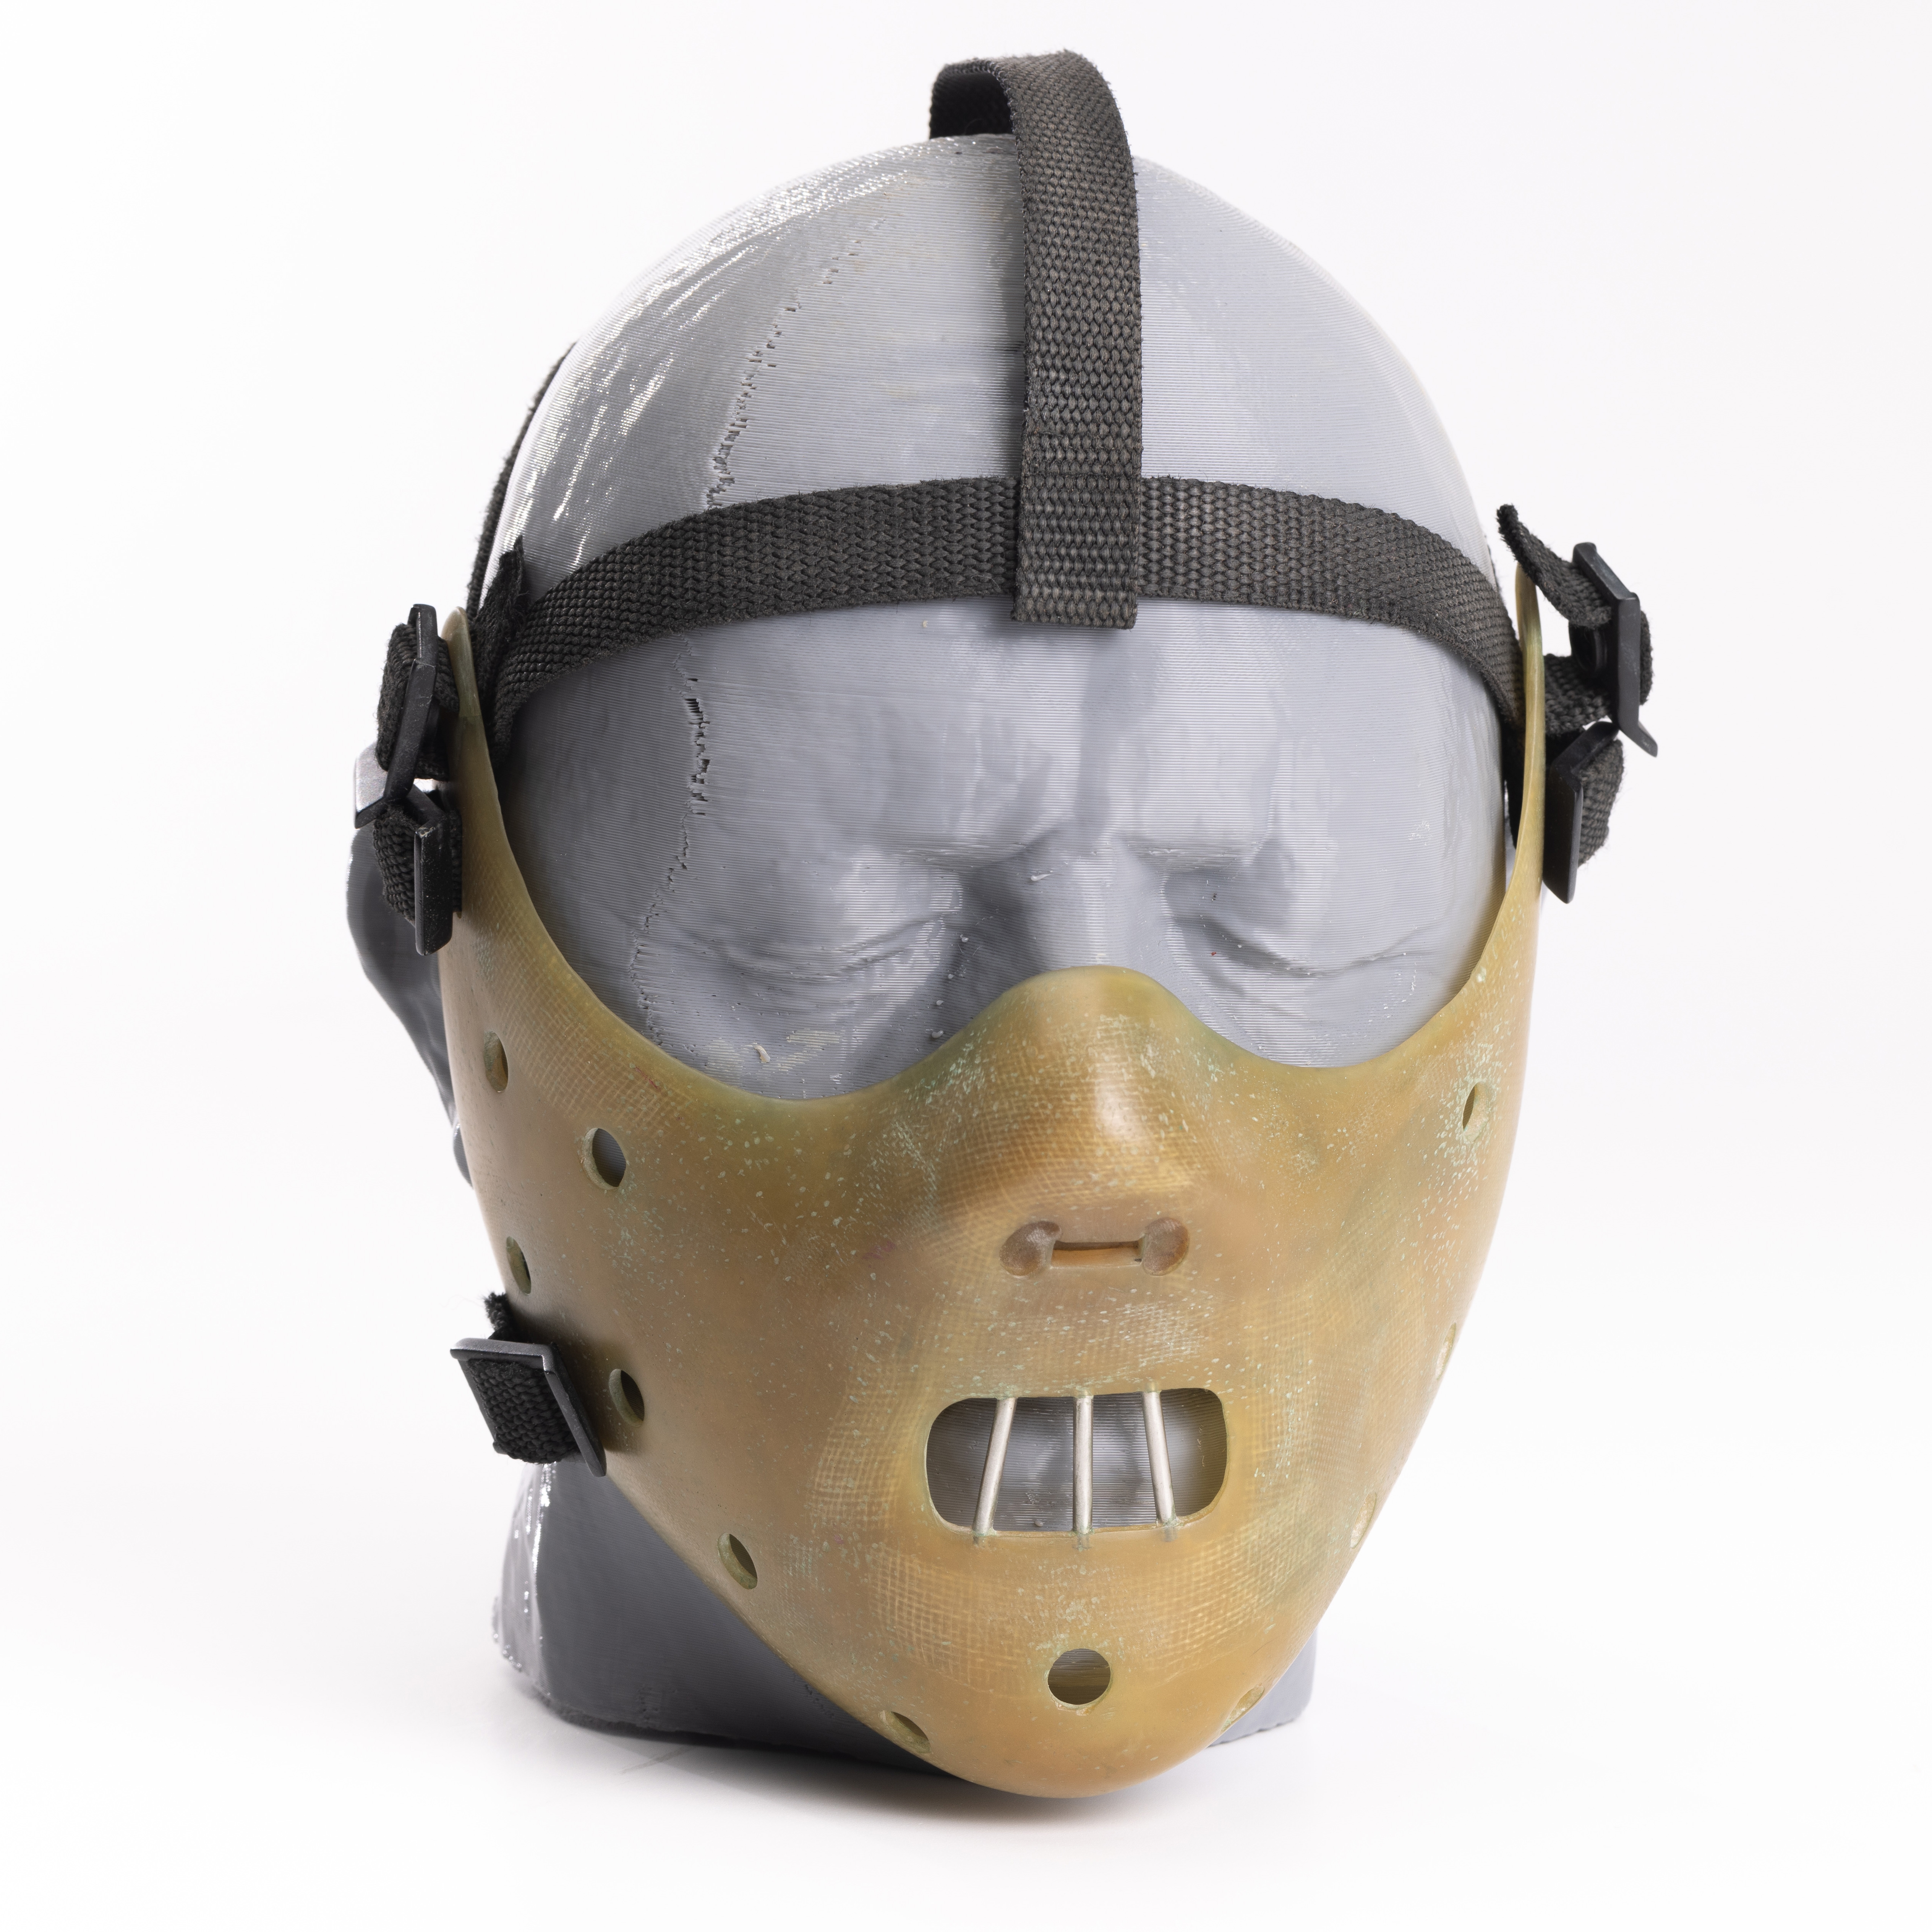 Hannibal lector mask